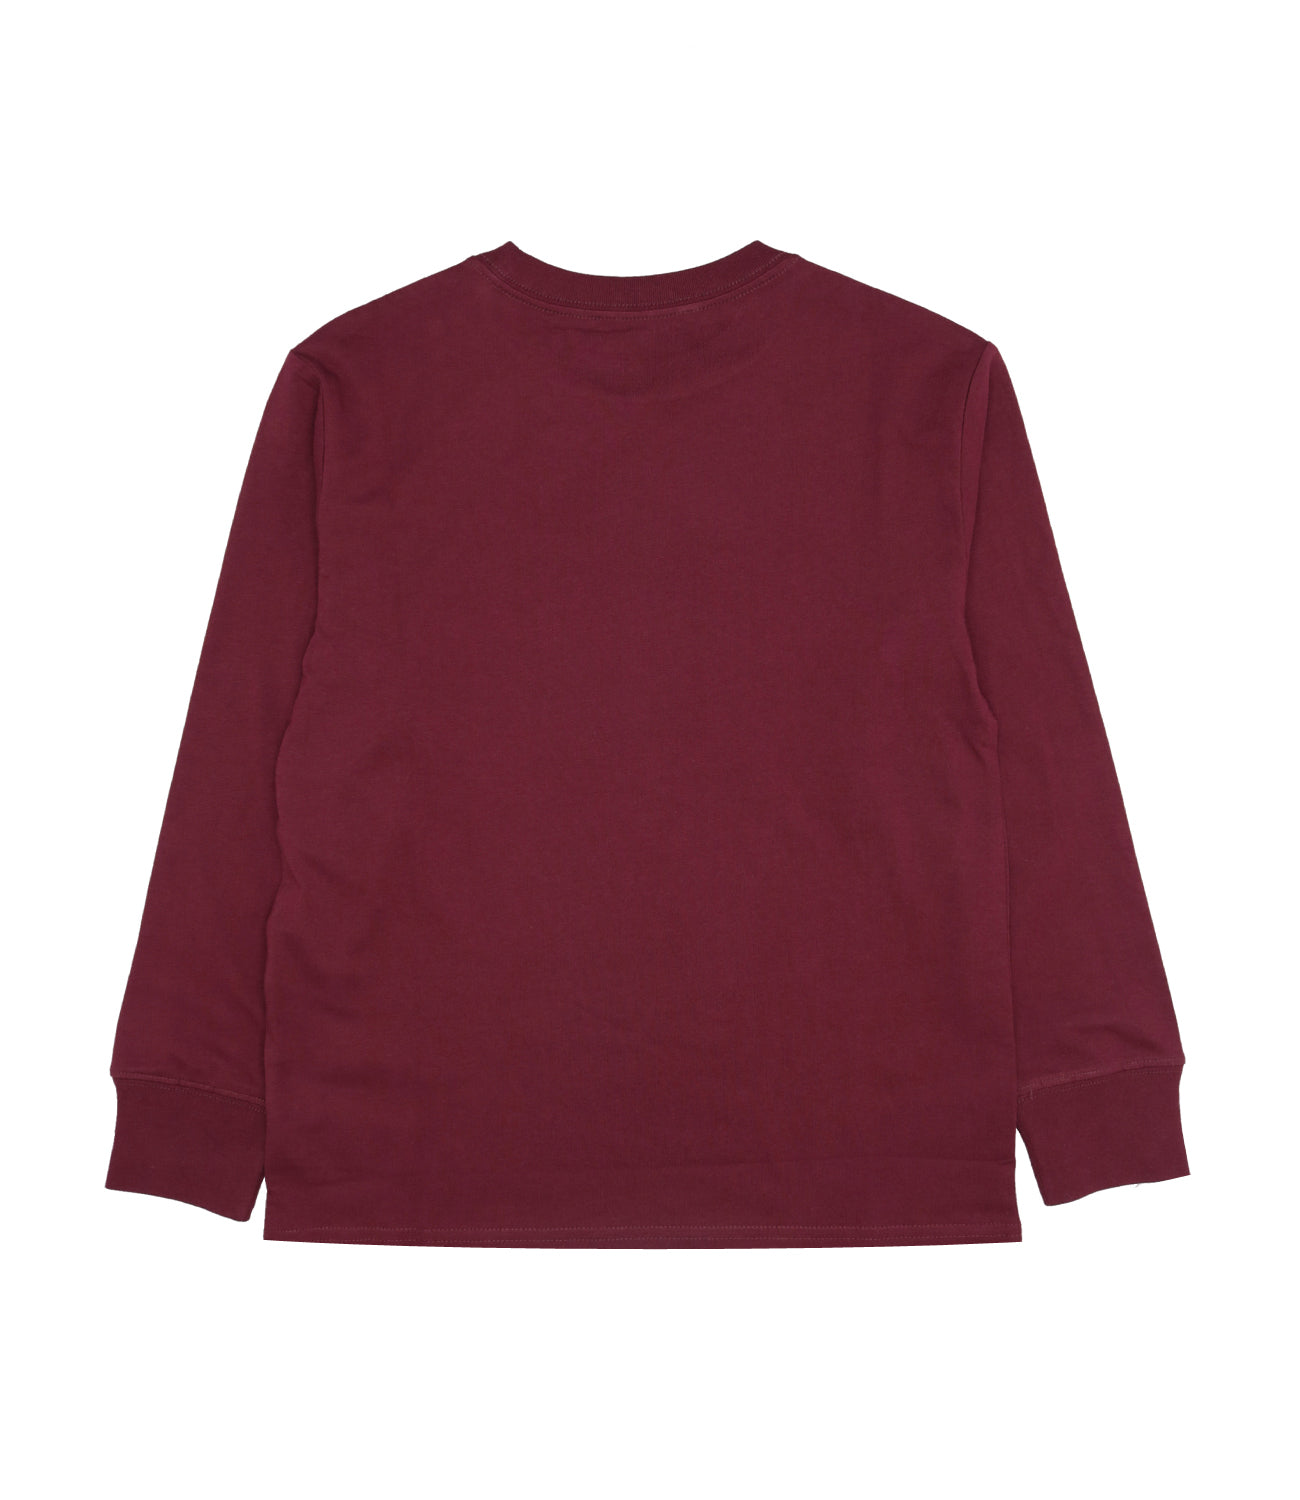 Ralph Lauren Childrenswear |T-Shirt Bordeaux